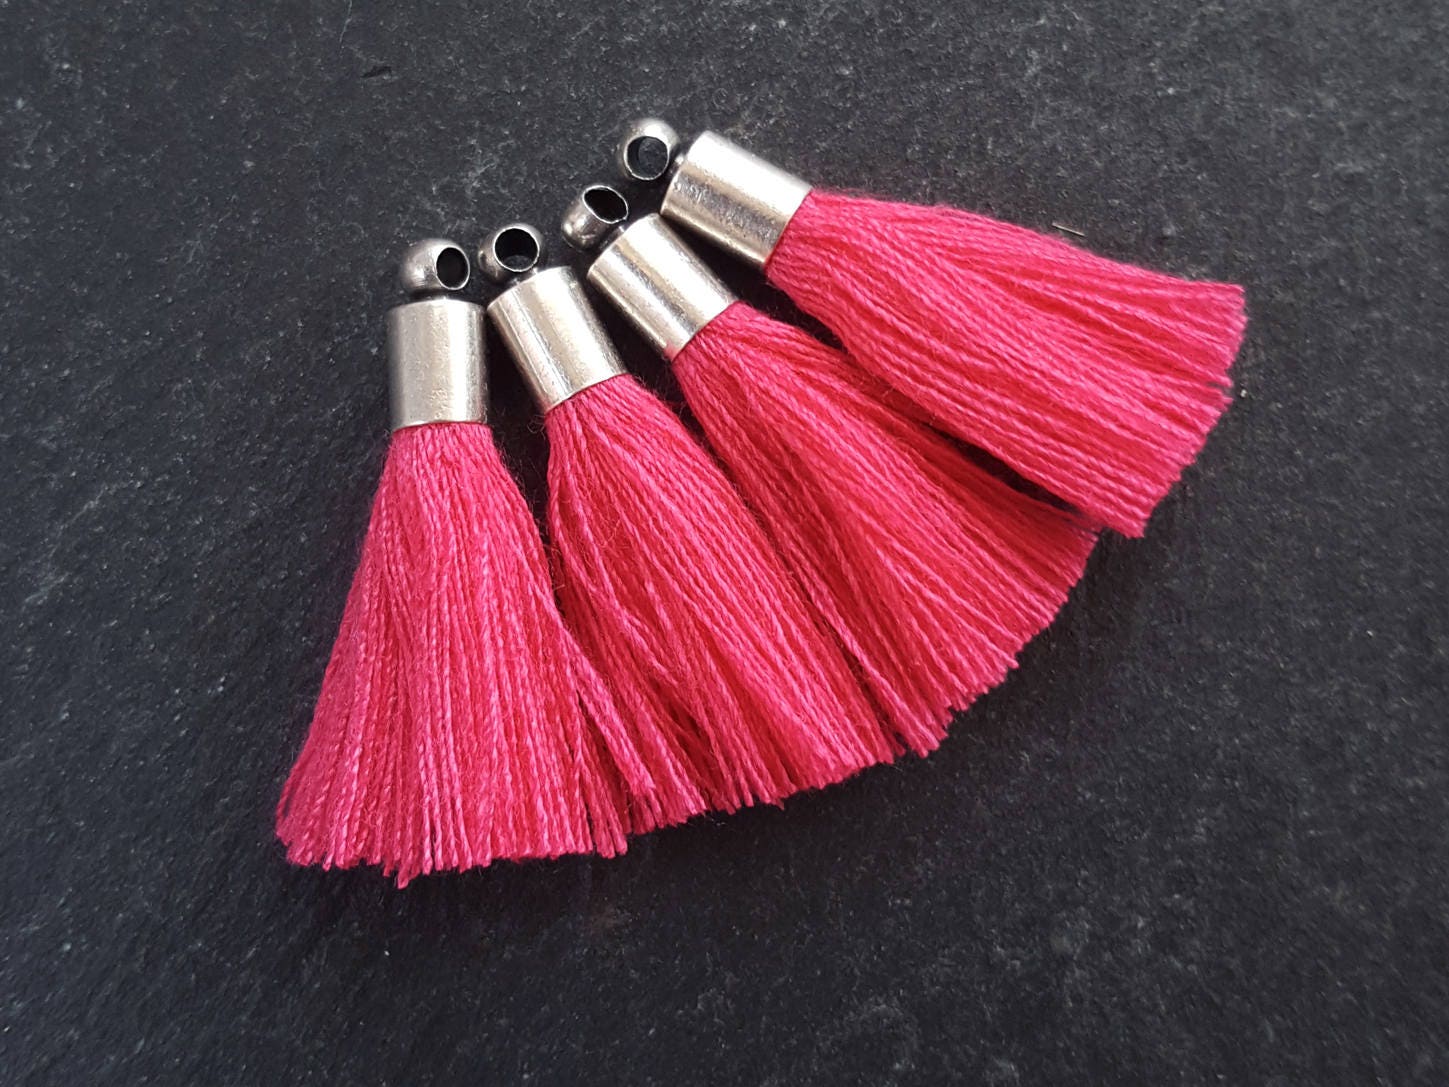 Mini Fuchsia Pink Soft Thread Tassels Earring Bracelet Tassel Fringe Findings - Antique Matte Silver Plated Cap - 26mm - 4pc - NEW CAP